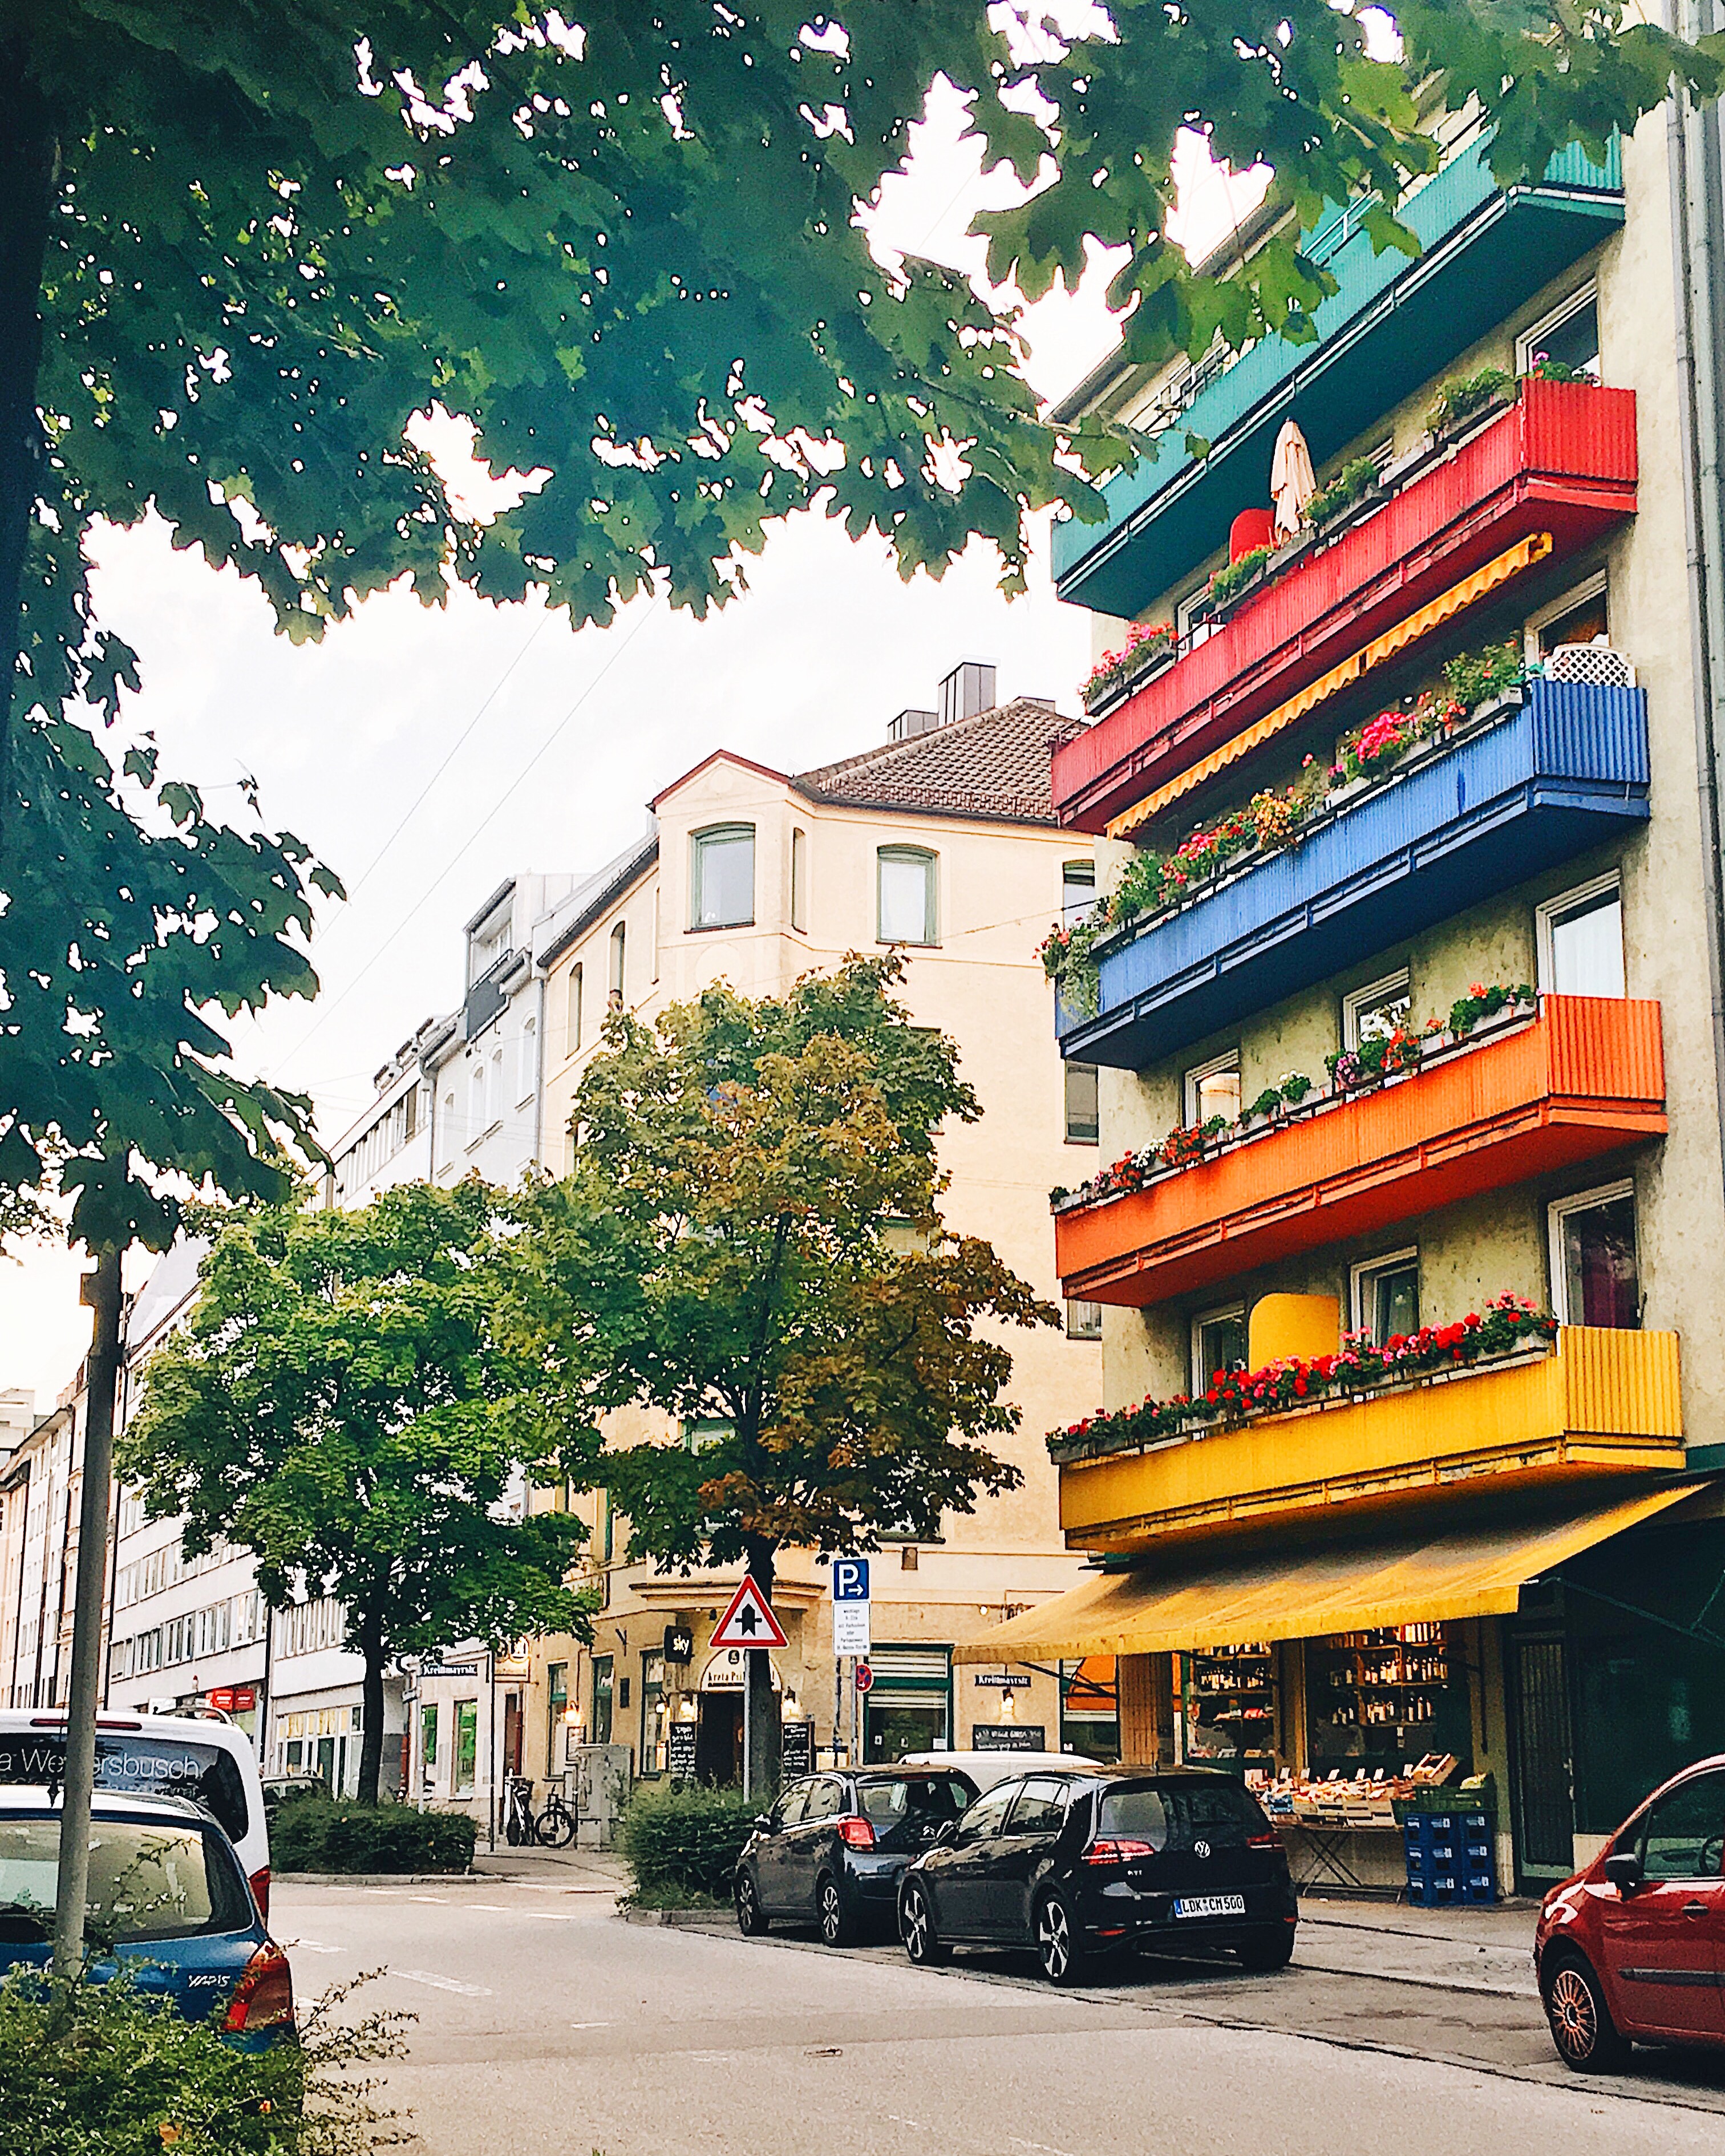 Colorful buildings in Munich